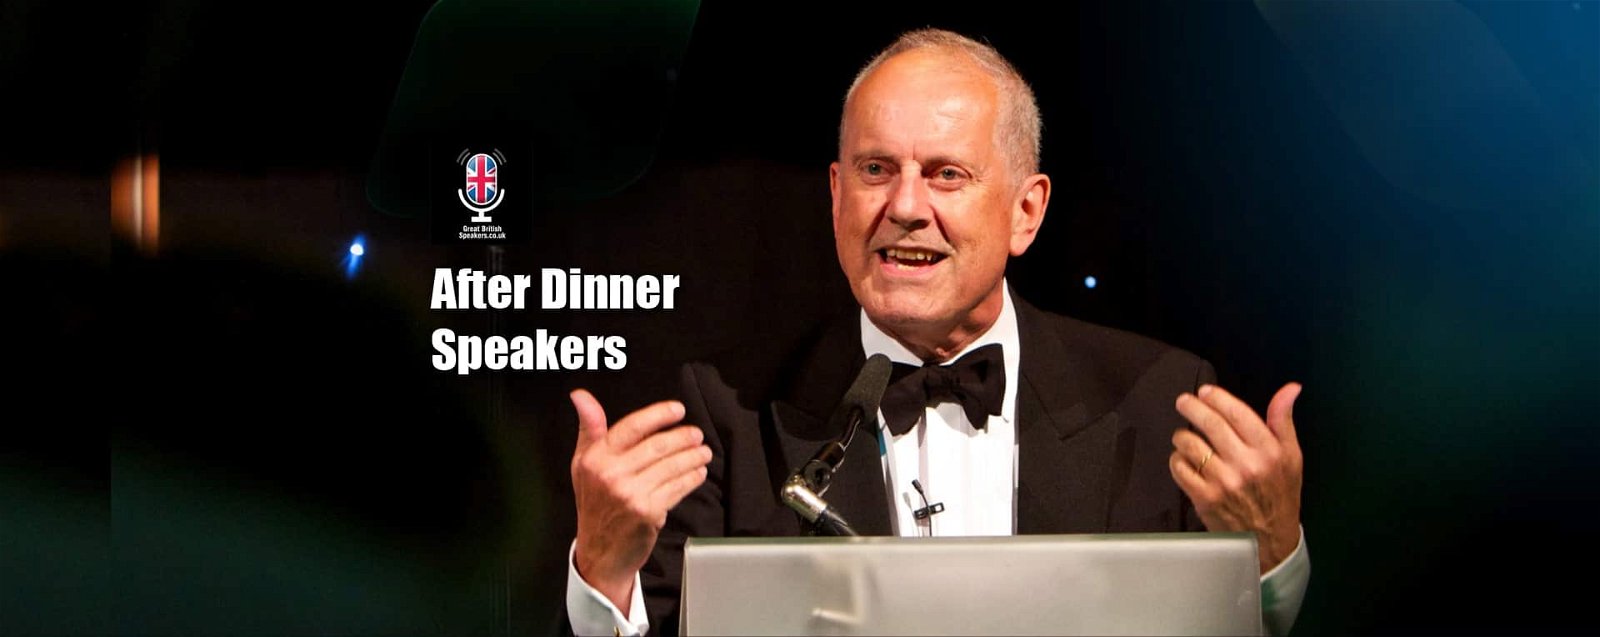 After Dinner Speakers Slider Great British Speakers-min